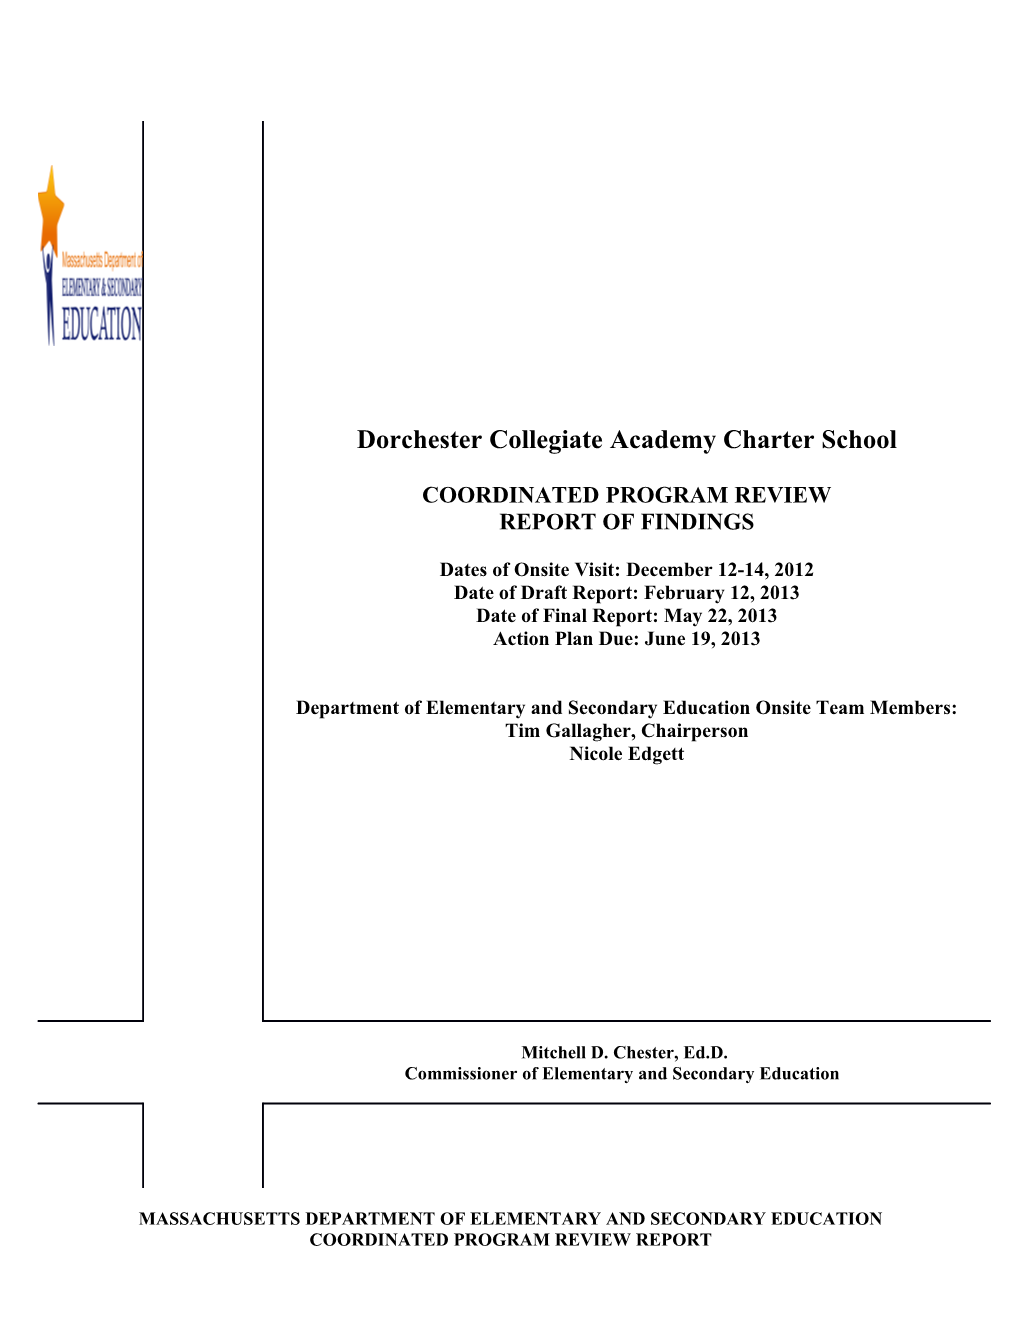 Dorchester Collegiate Academy Charter School CPR Final Report 2013